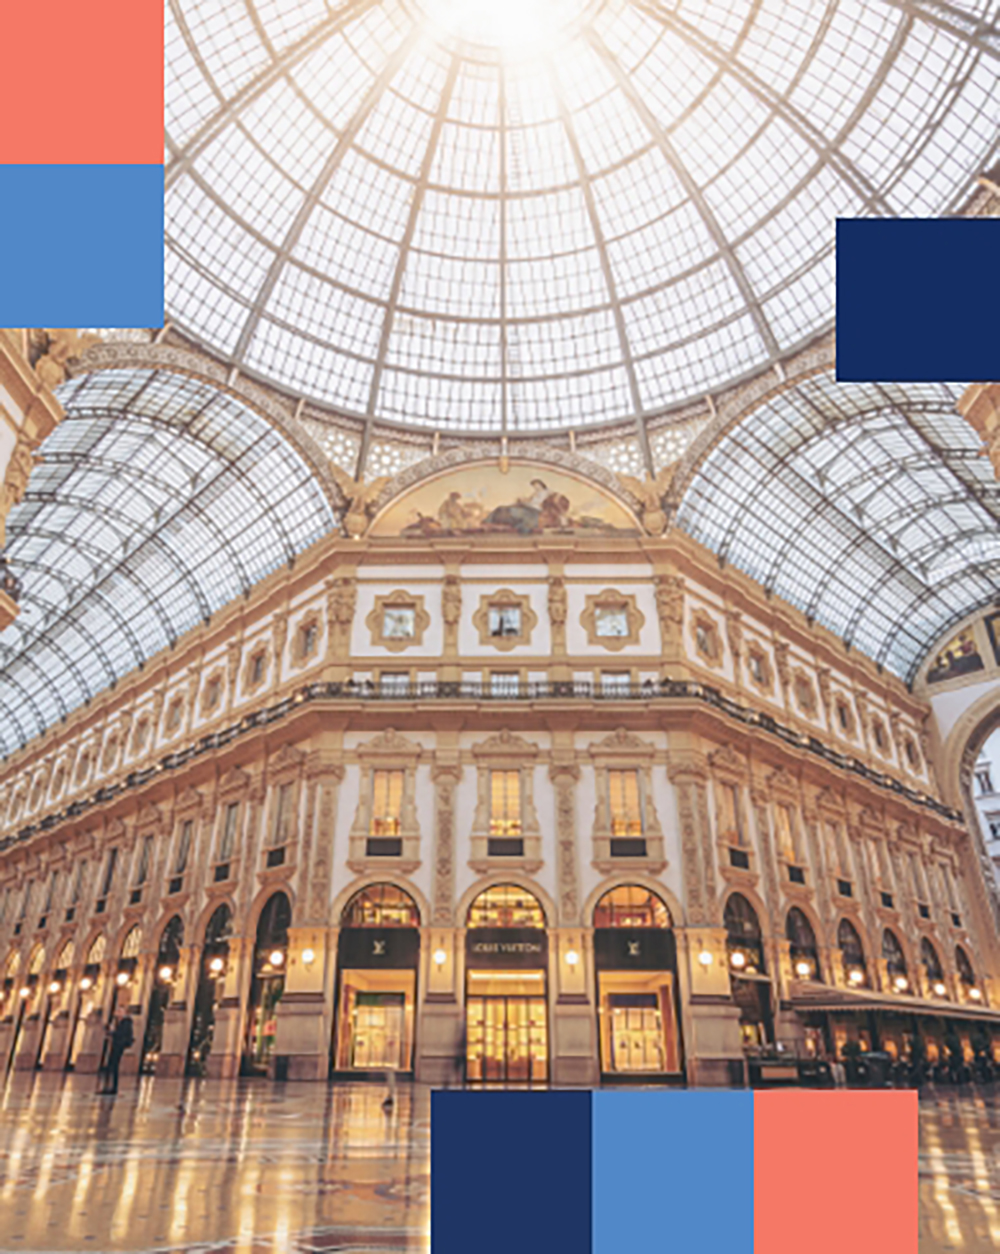 Inside Galleria Vittorio Emanuele II in Milan - mobile